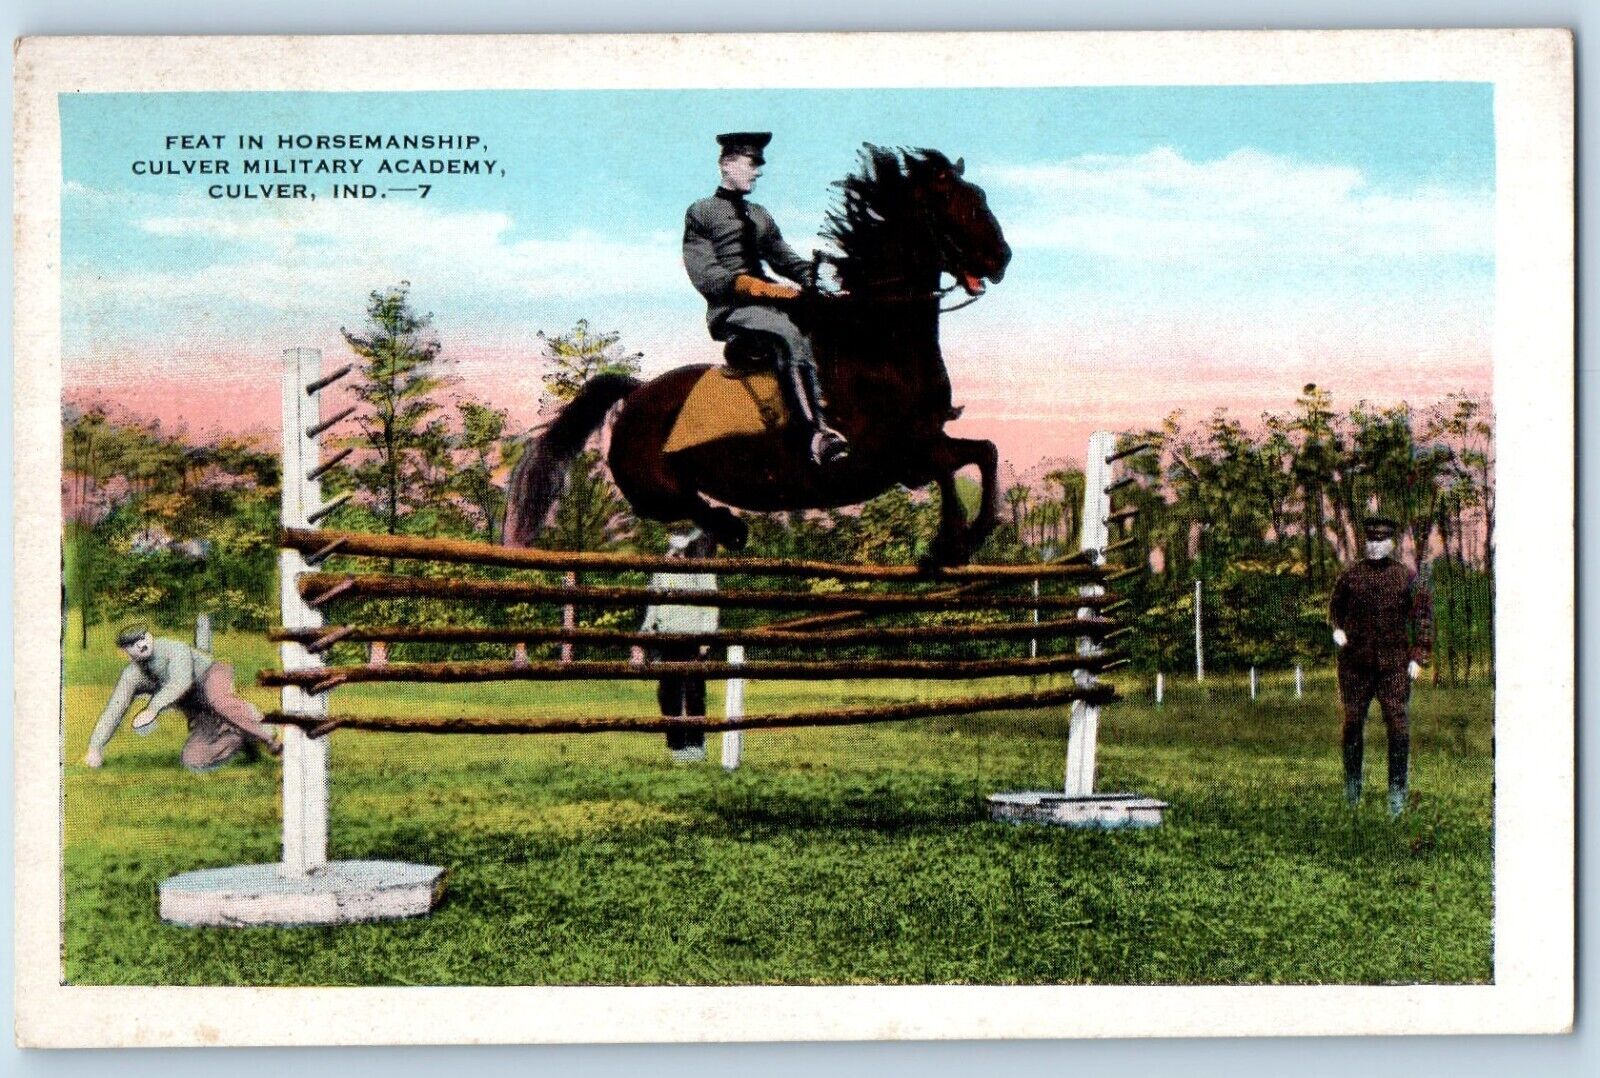 Culver Indiana Postcard Feat Horsemanship Military Academy c1920 Vintage Antique